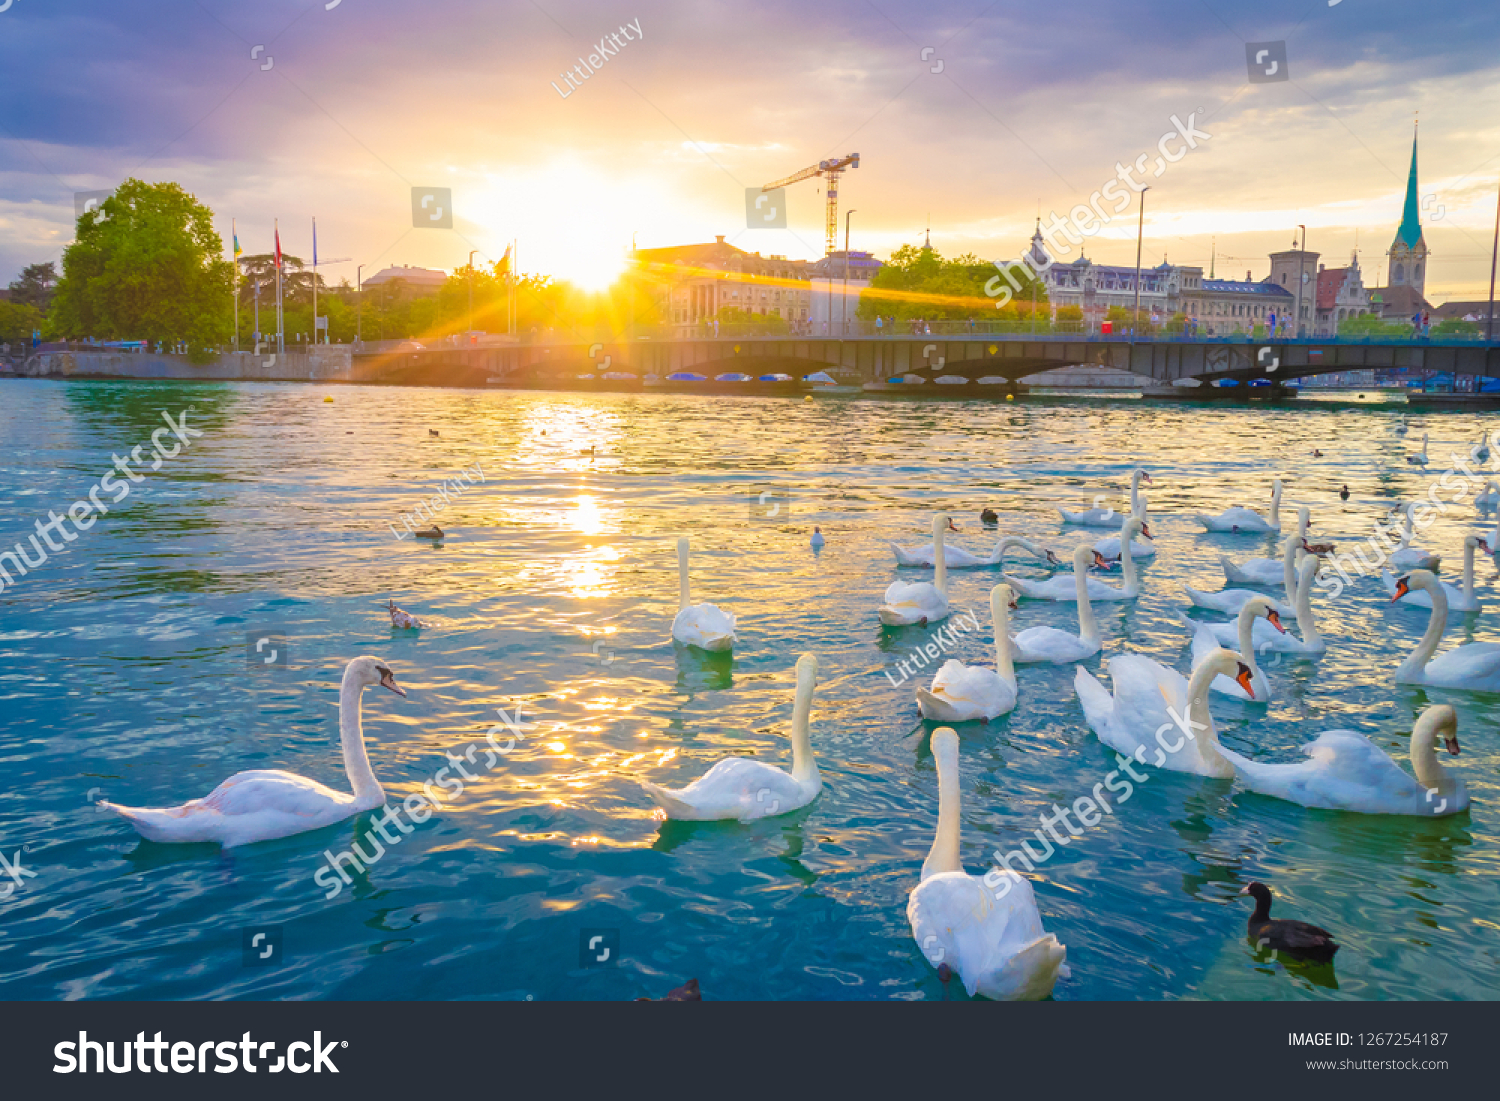 Sunset scene over lake Zurich and white swans with downtown background, Zurich, Switzerland.  #1267254187